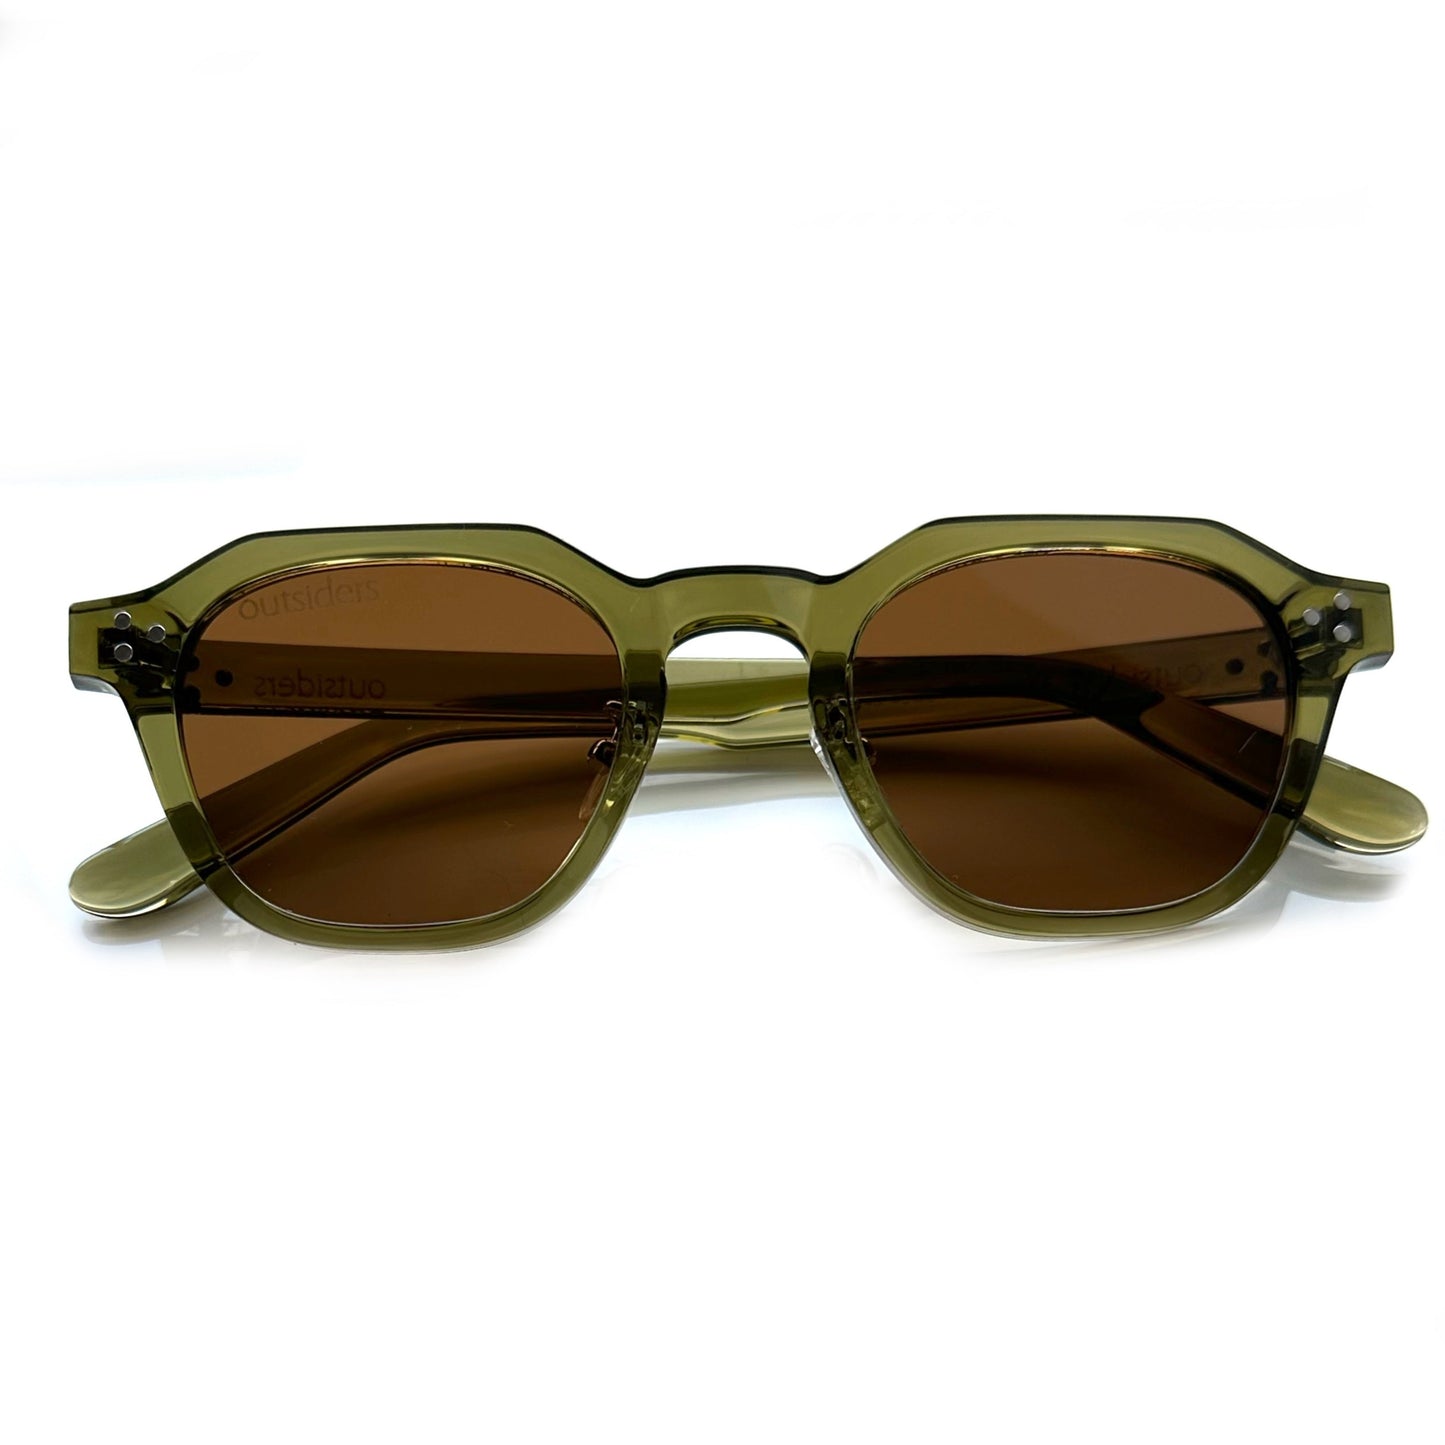 Outsiders Breeze Sunglasses - Moss Green